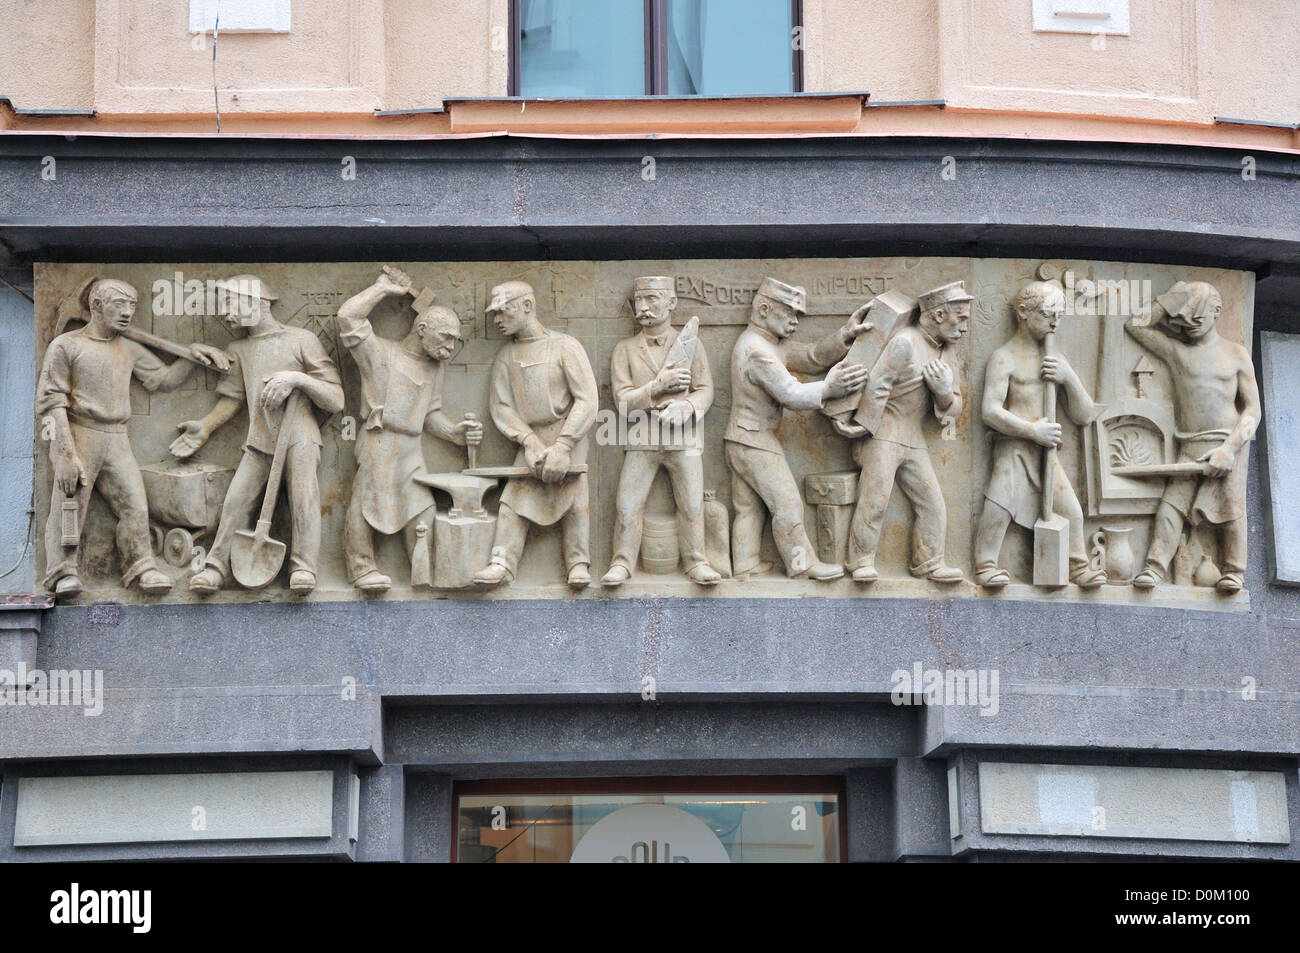 Prague, Czech Republic. Facade detail in Panska street showing industry - Export Import Stock Photo